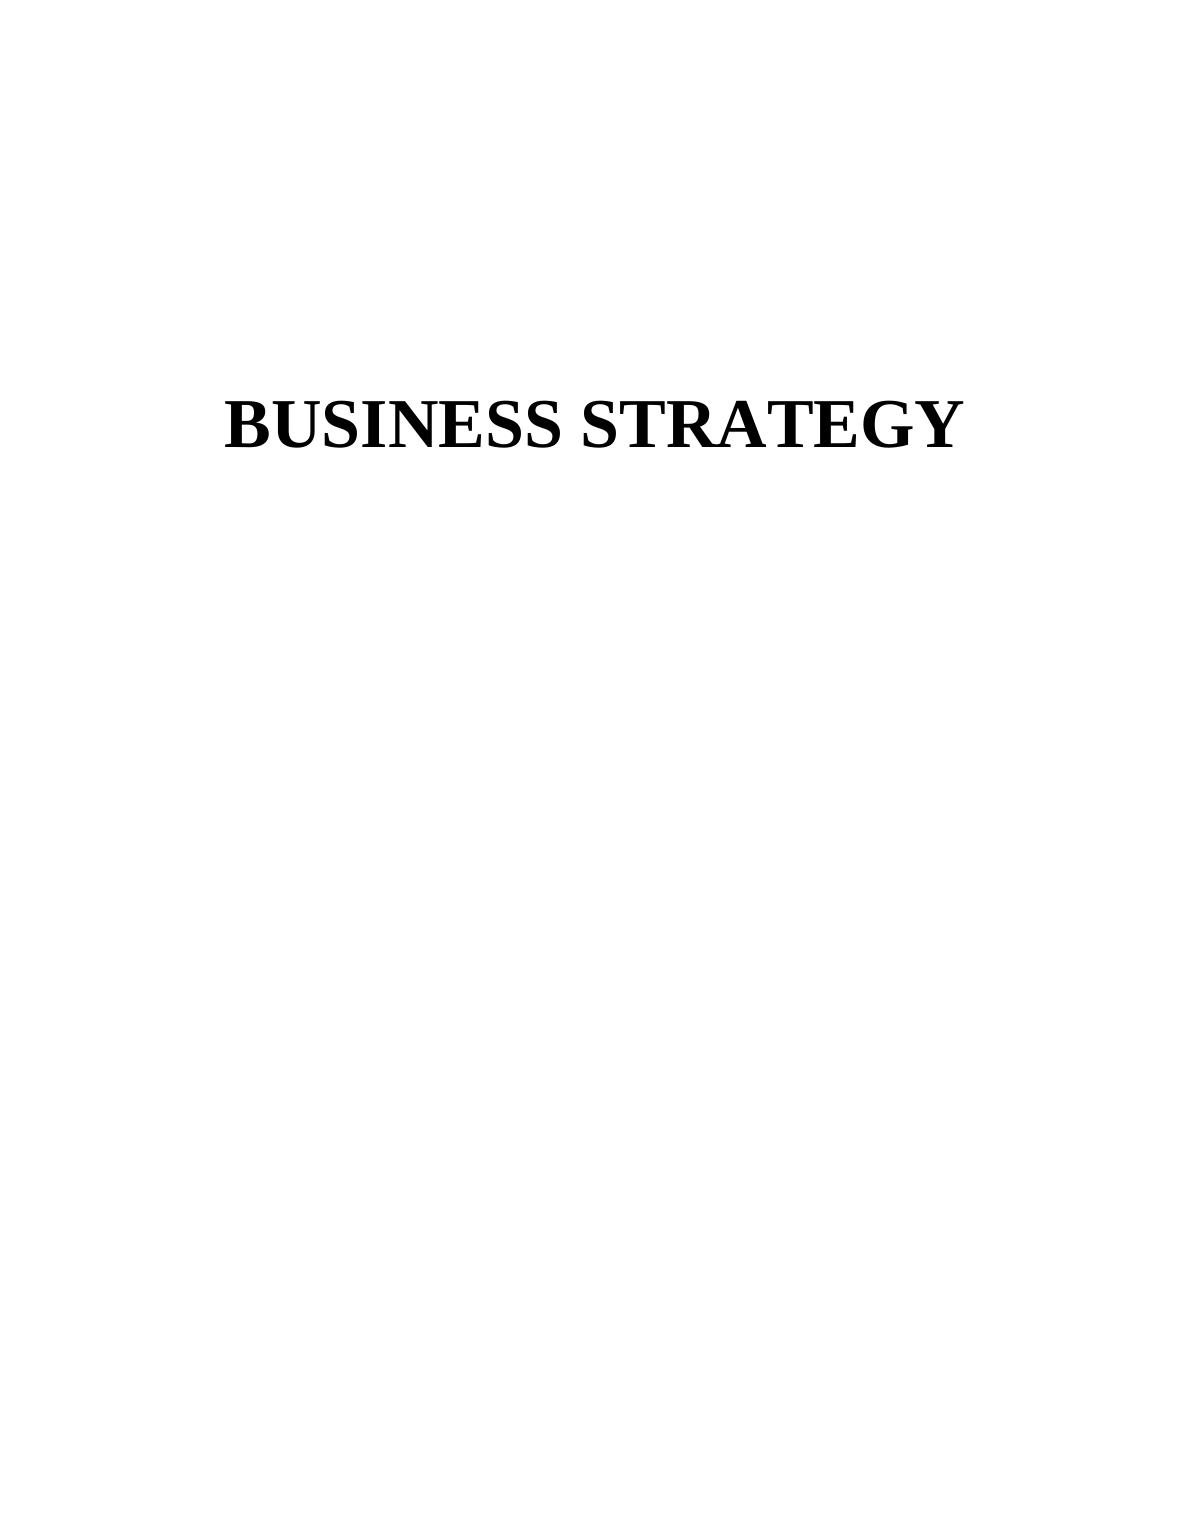 Business Strategy of Organization_1